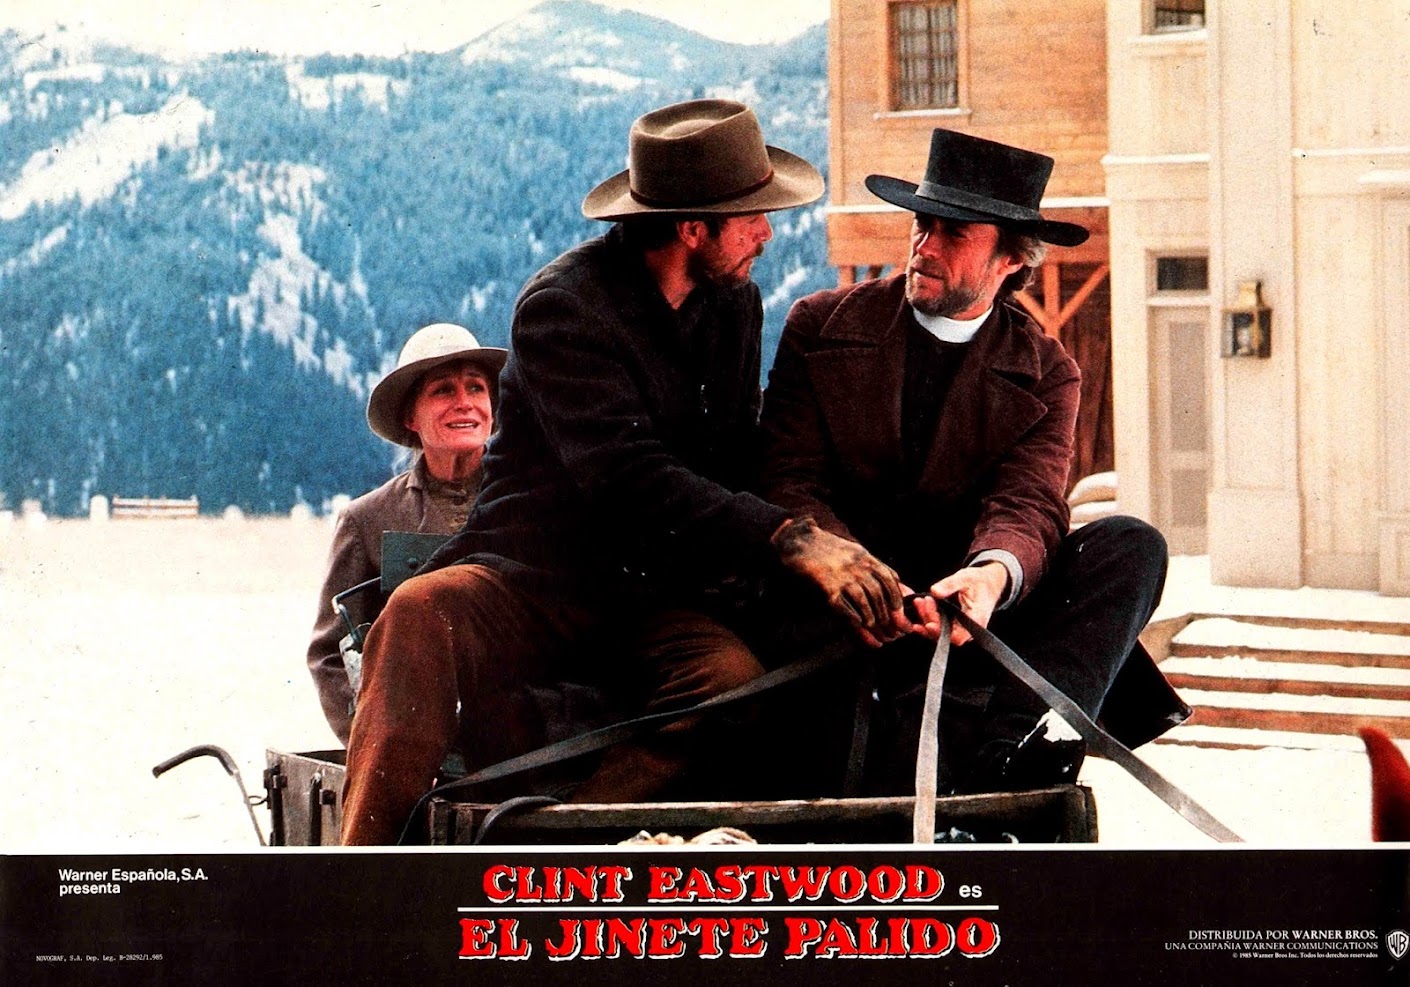 Pale rider : Le cavalier solitaire (1984) Clint Eastwood - Pale rider (14.09.1984 / 1984)